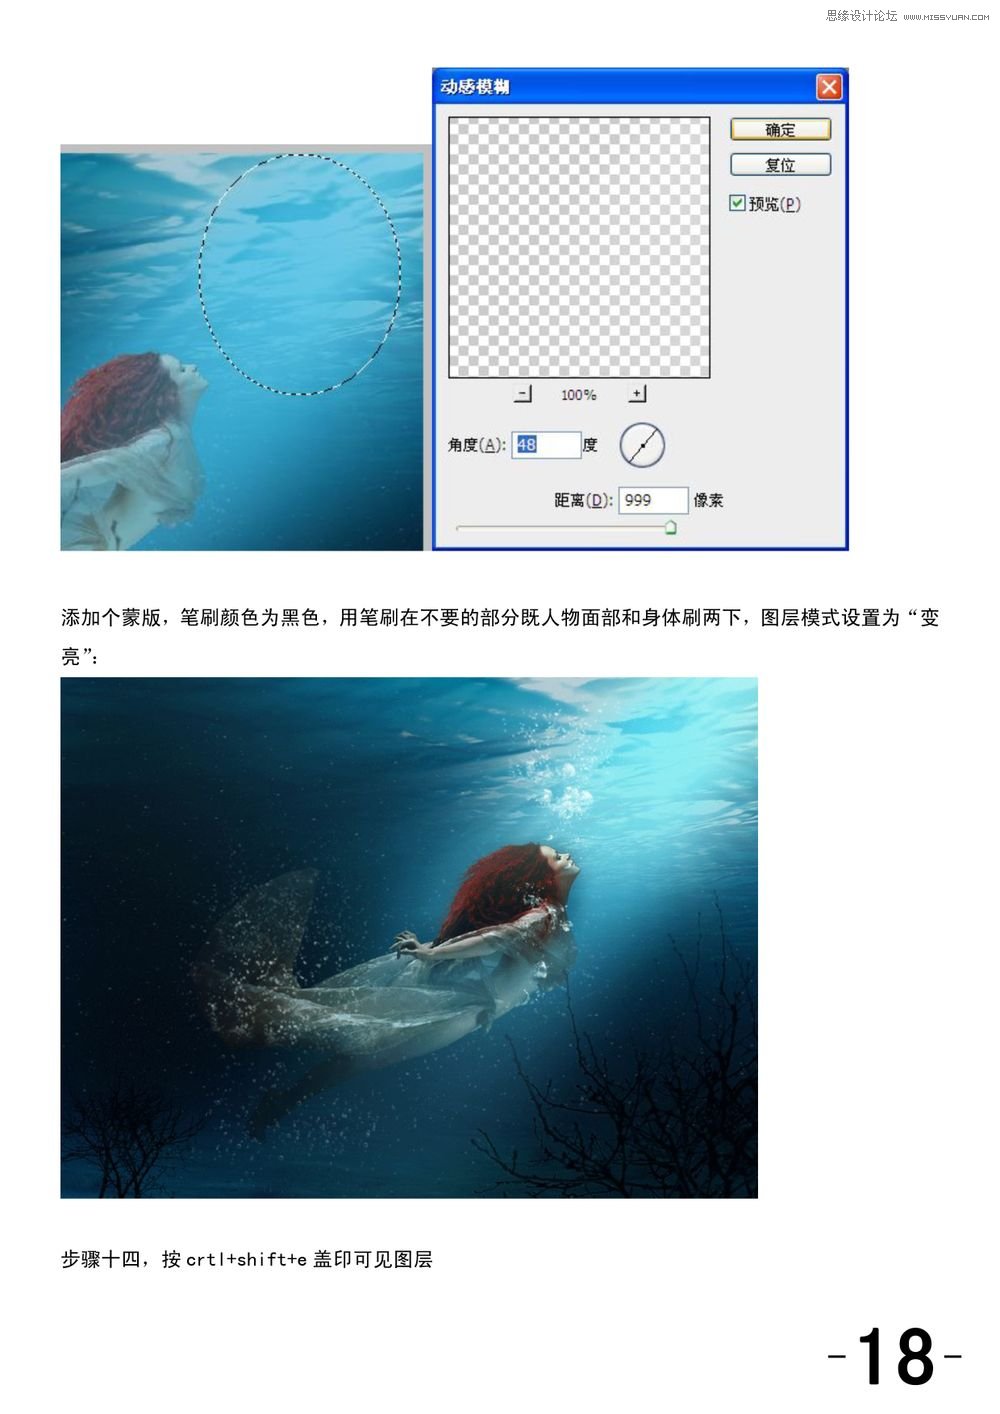 Photoshop合成海底唯美的人像摄影效果图20